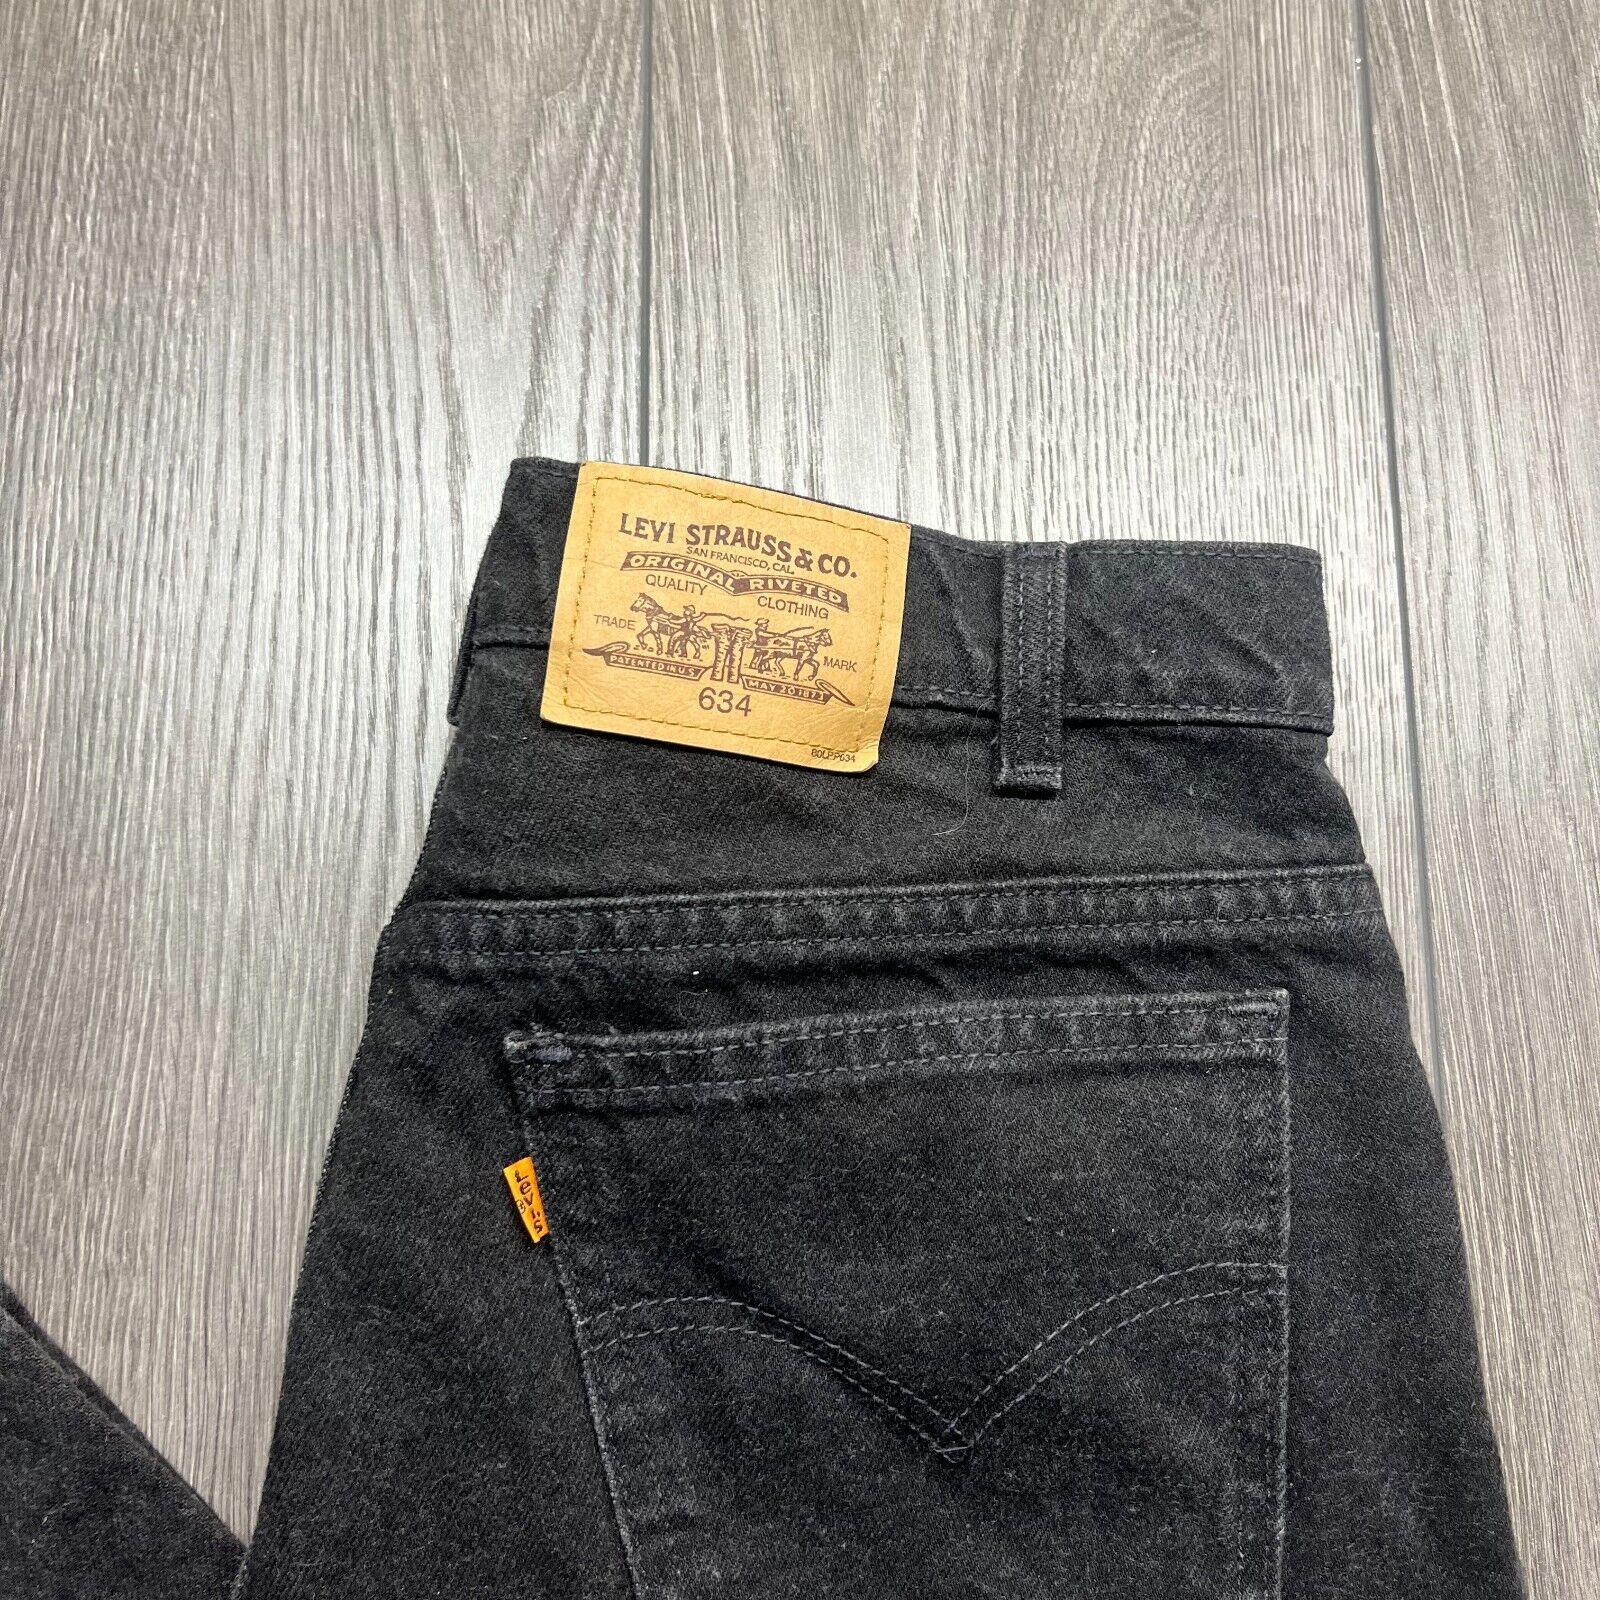 Vintage 90s Levis 634 Orange Tab Black Jeans Straight Leg Size 32x32